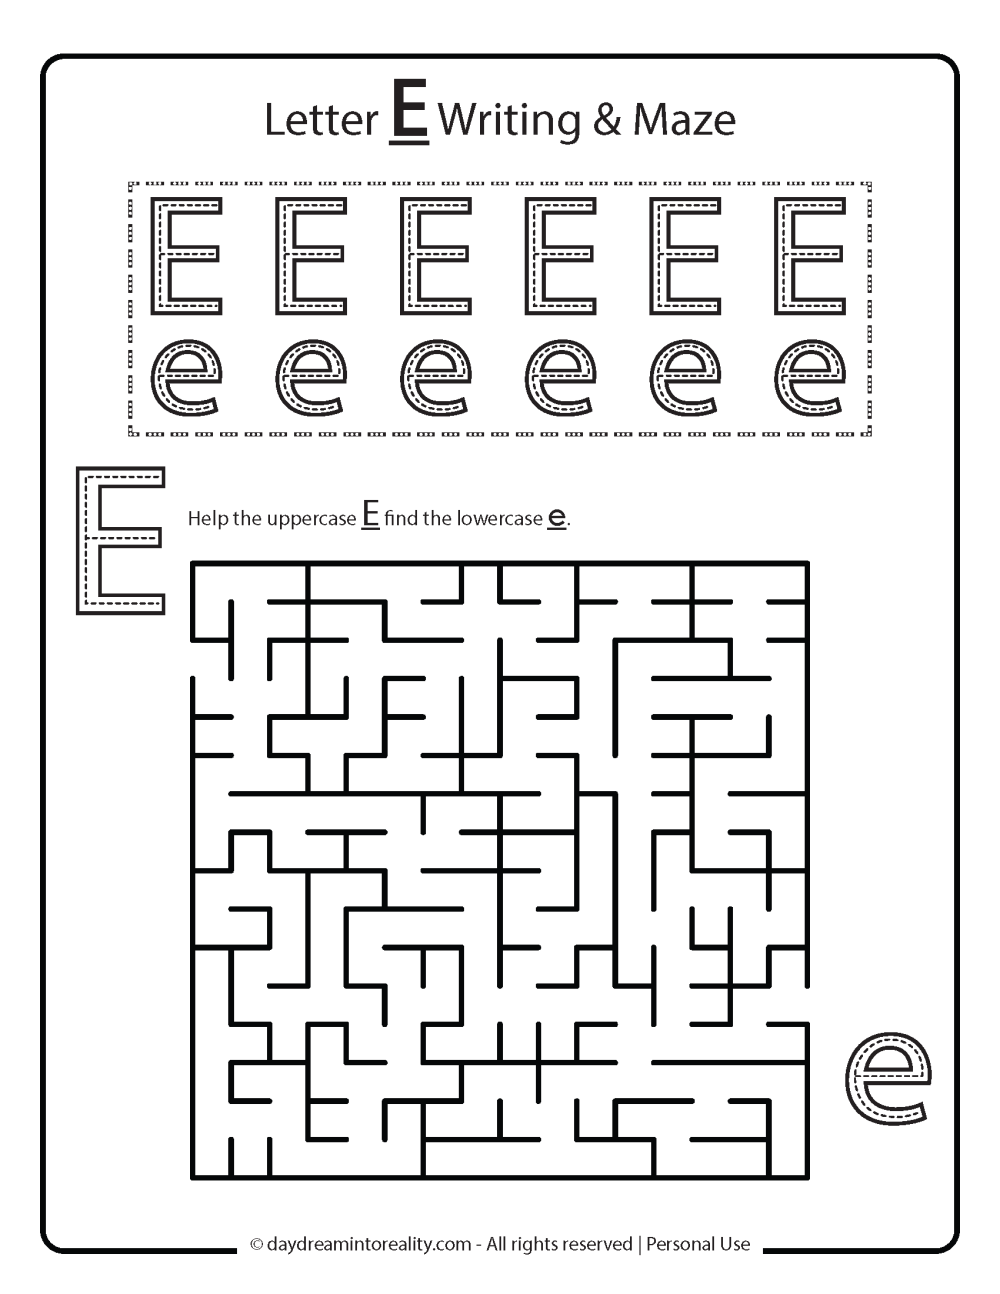 Letter E worksheet free printables. Writing and letter E maze